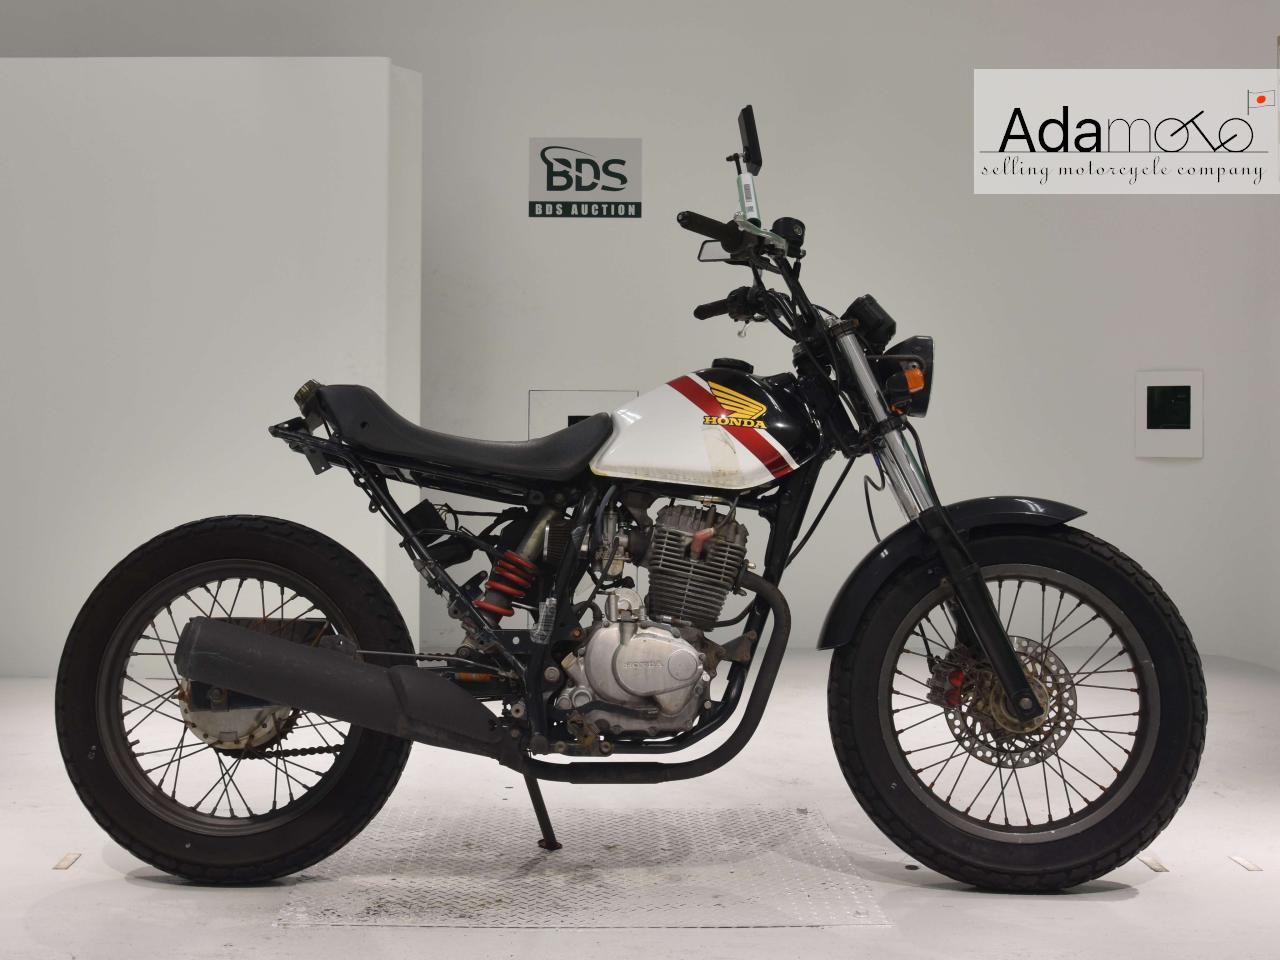 Honda FTR223 - Adamoto - Motorcycles from Japan